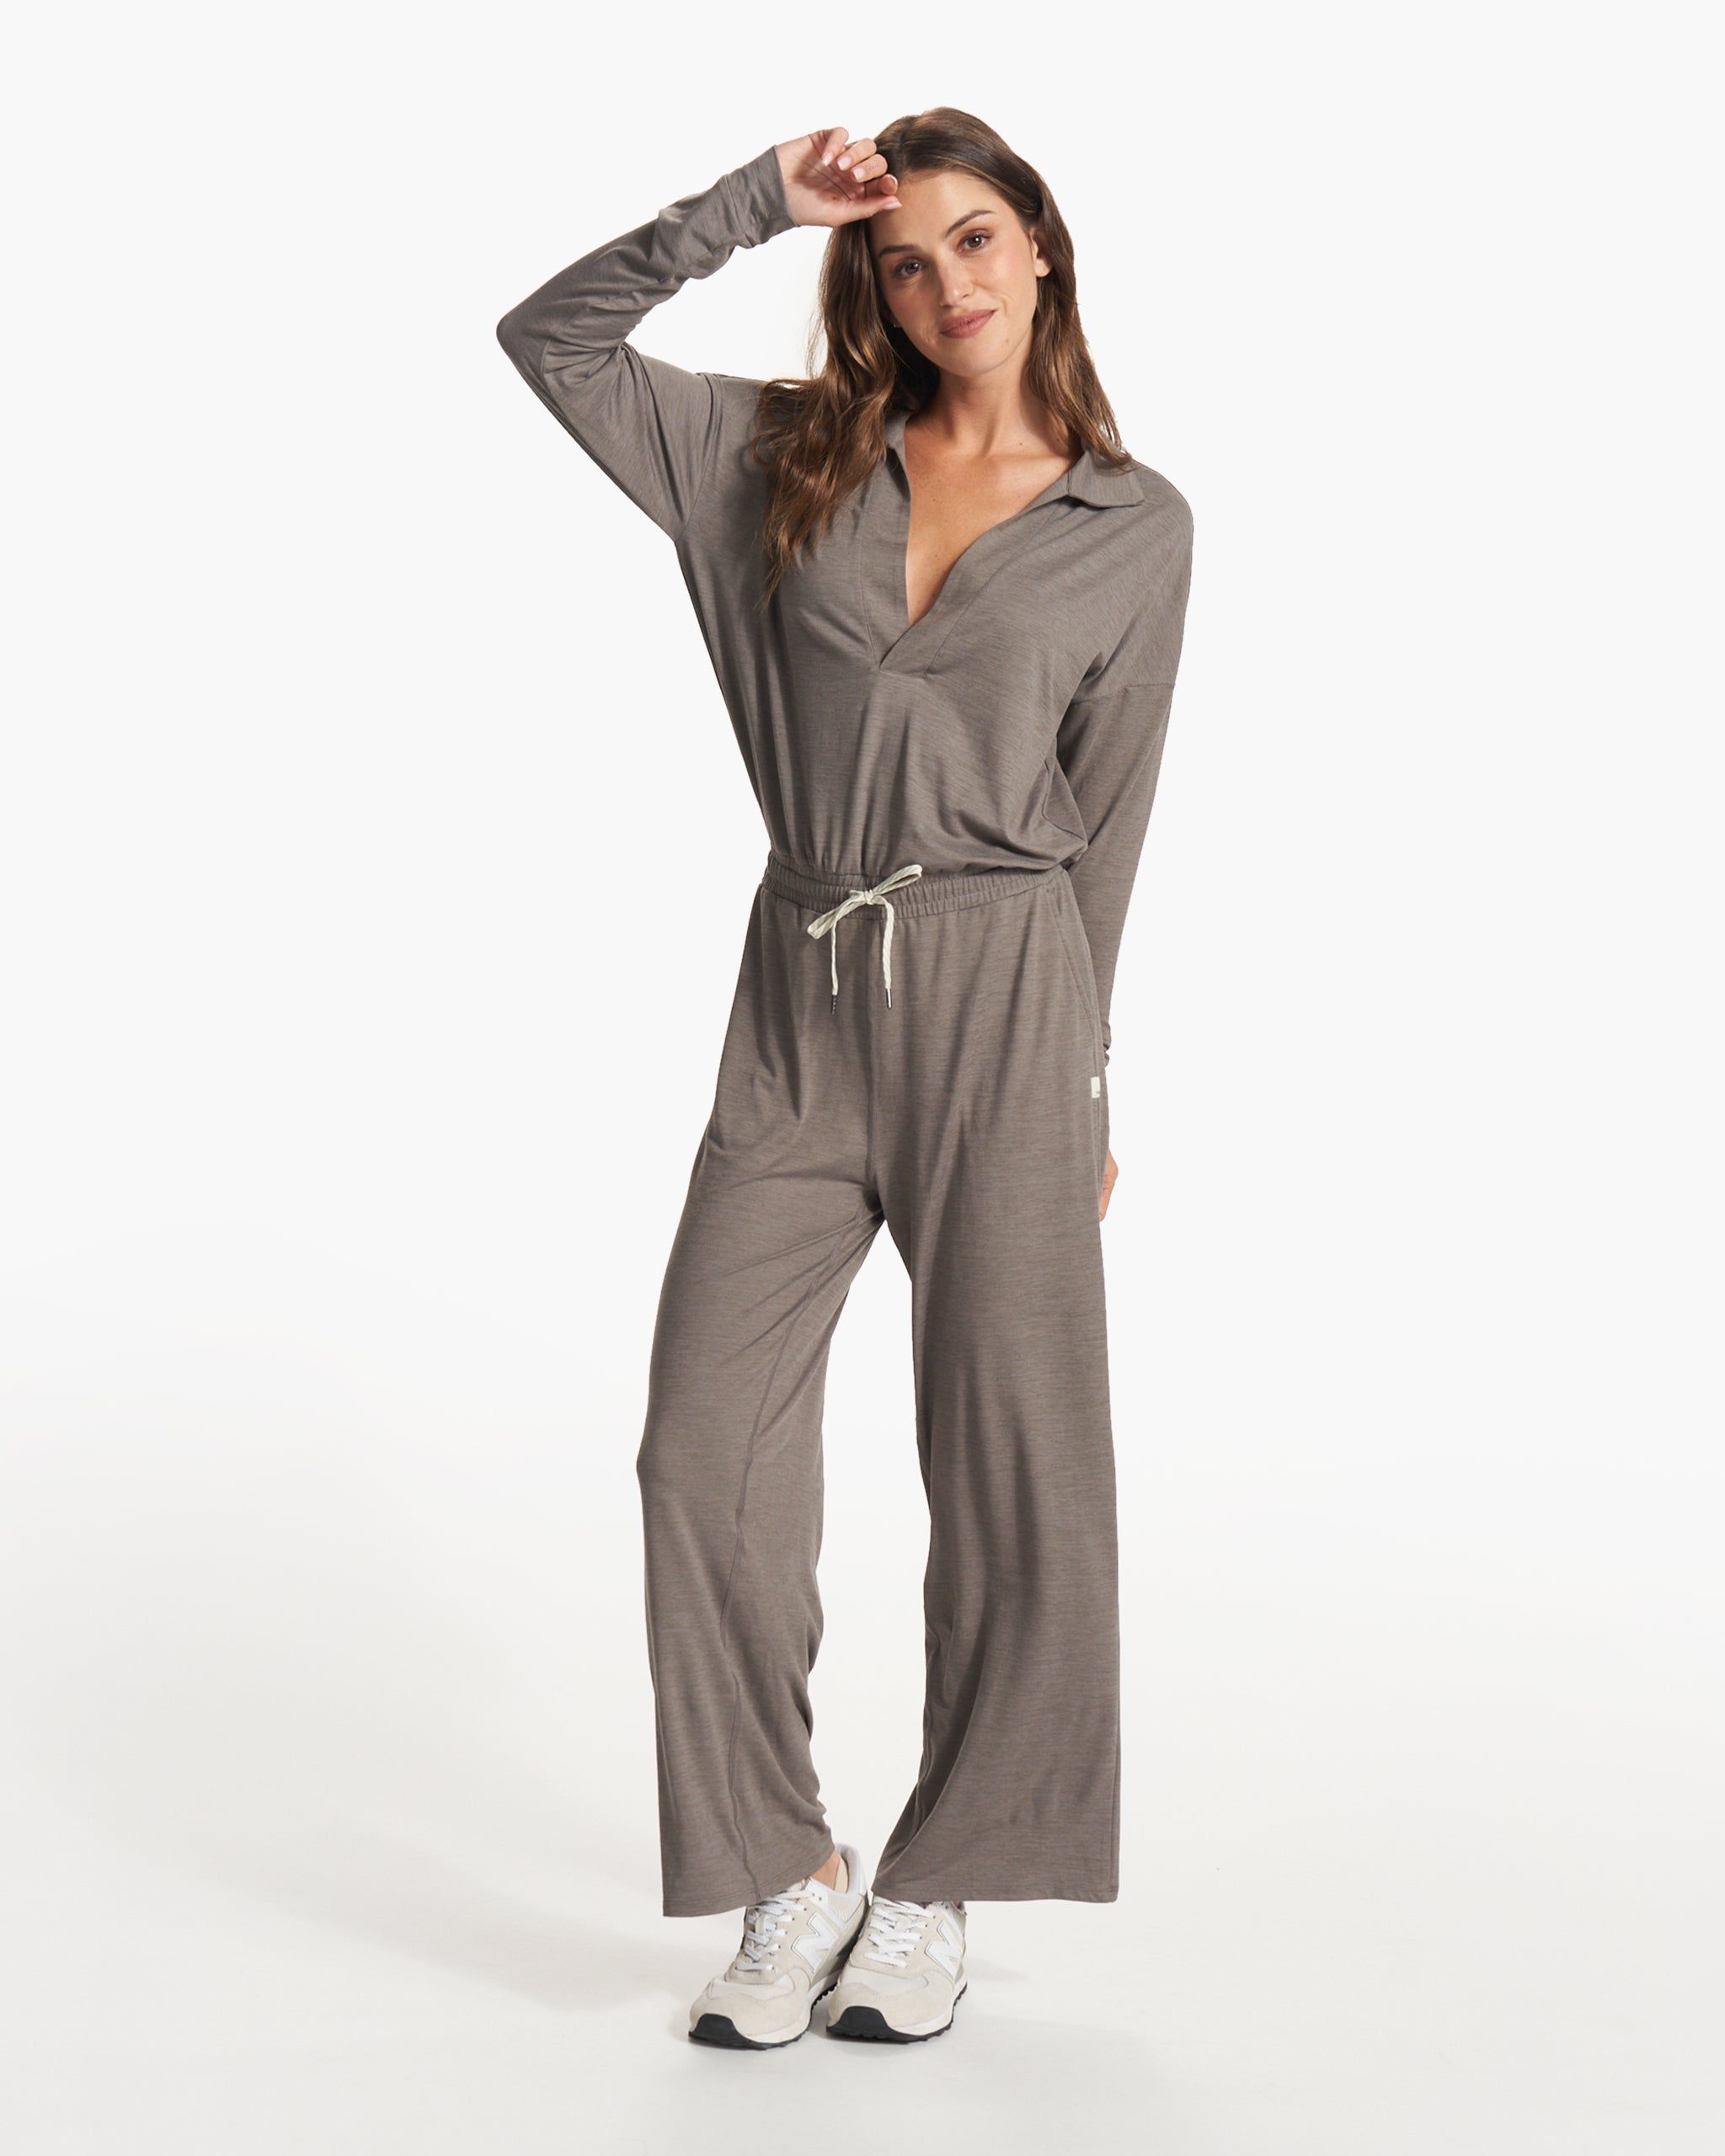 Alexander Del Rossa Women's Hooded Footed Pajamas, Plush Adult Onesie,